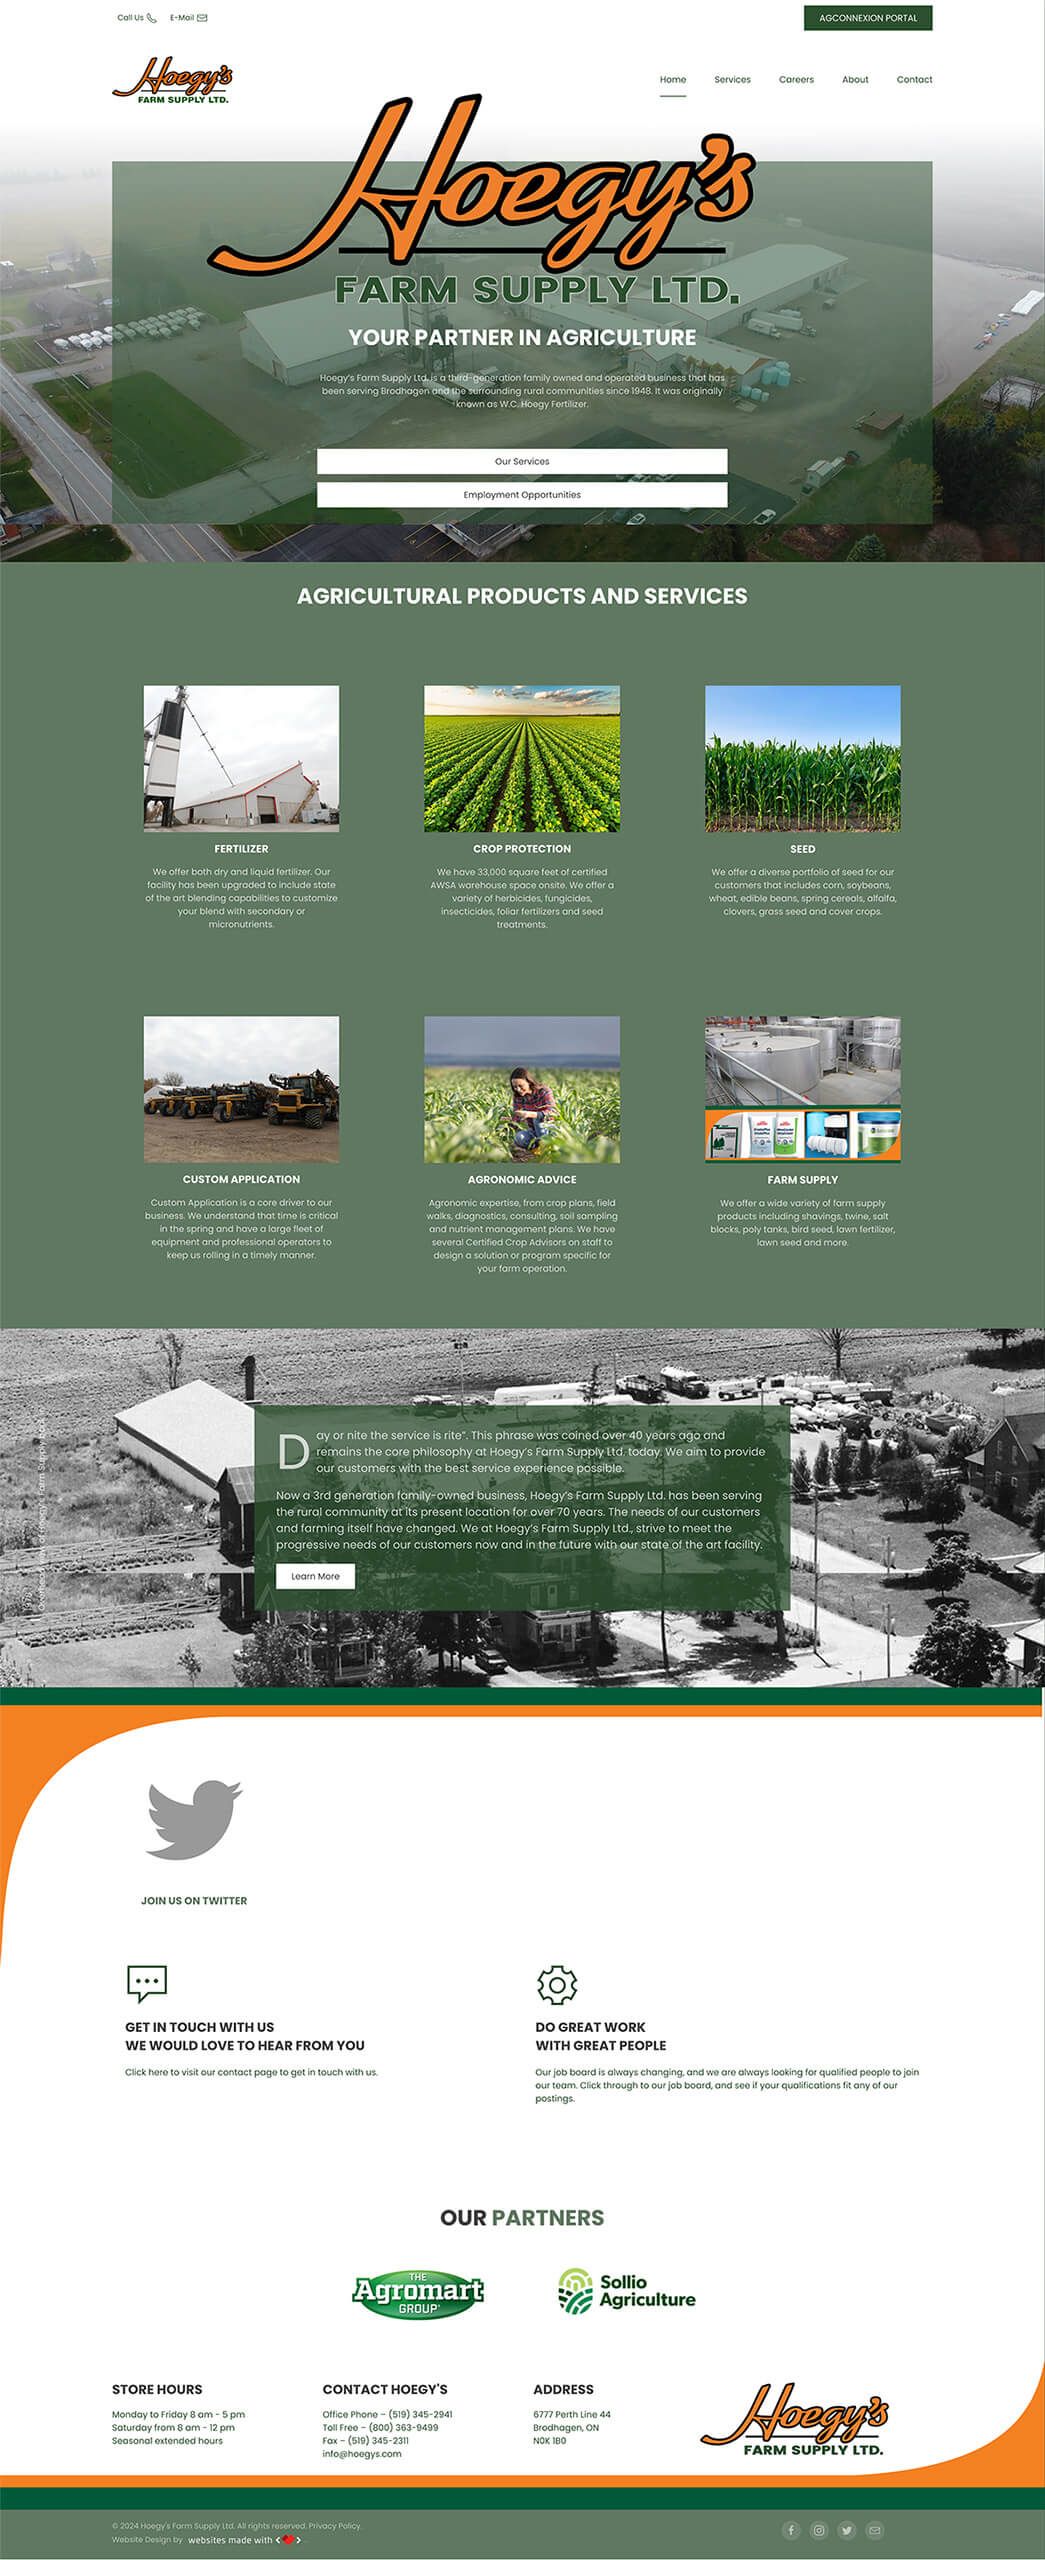 Hoegys Farm Supply Ltd Homepage Full View Design